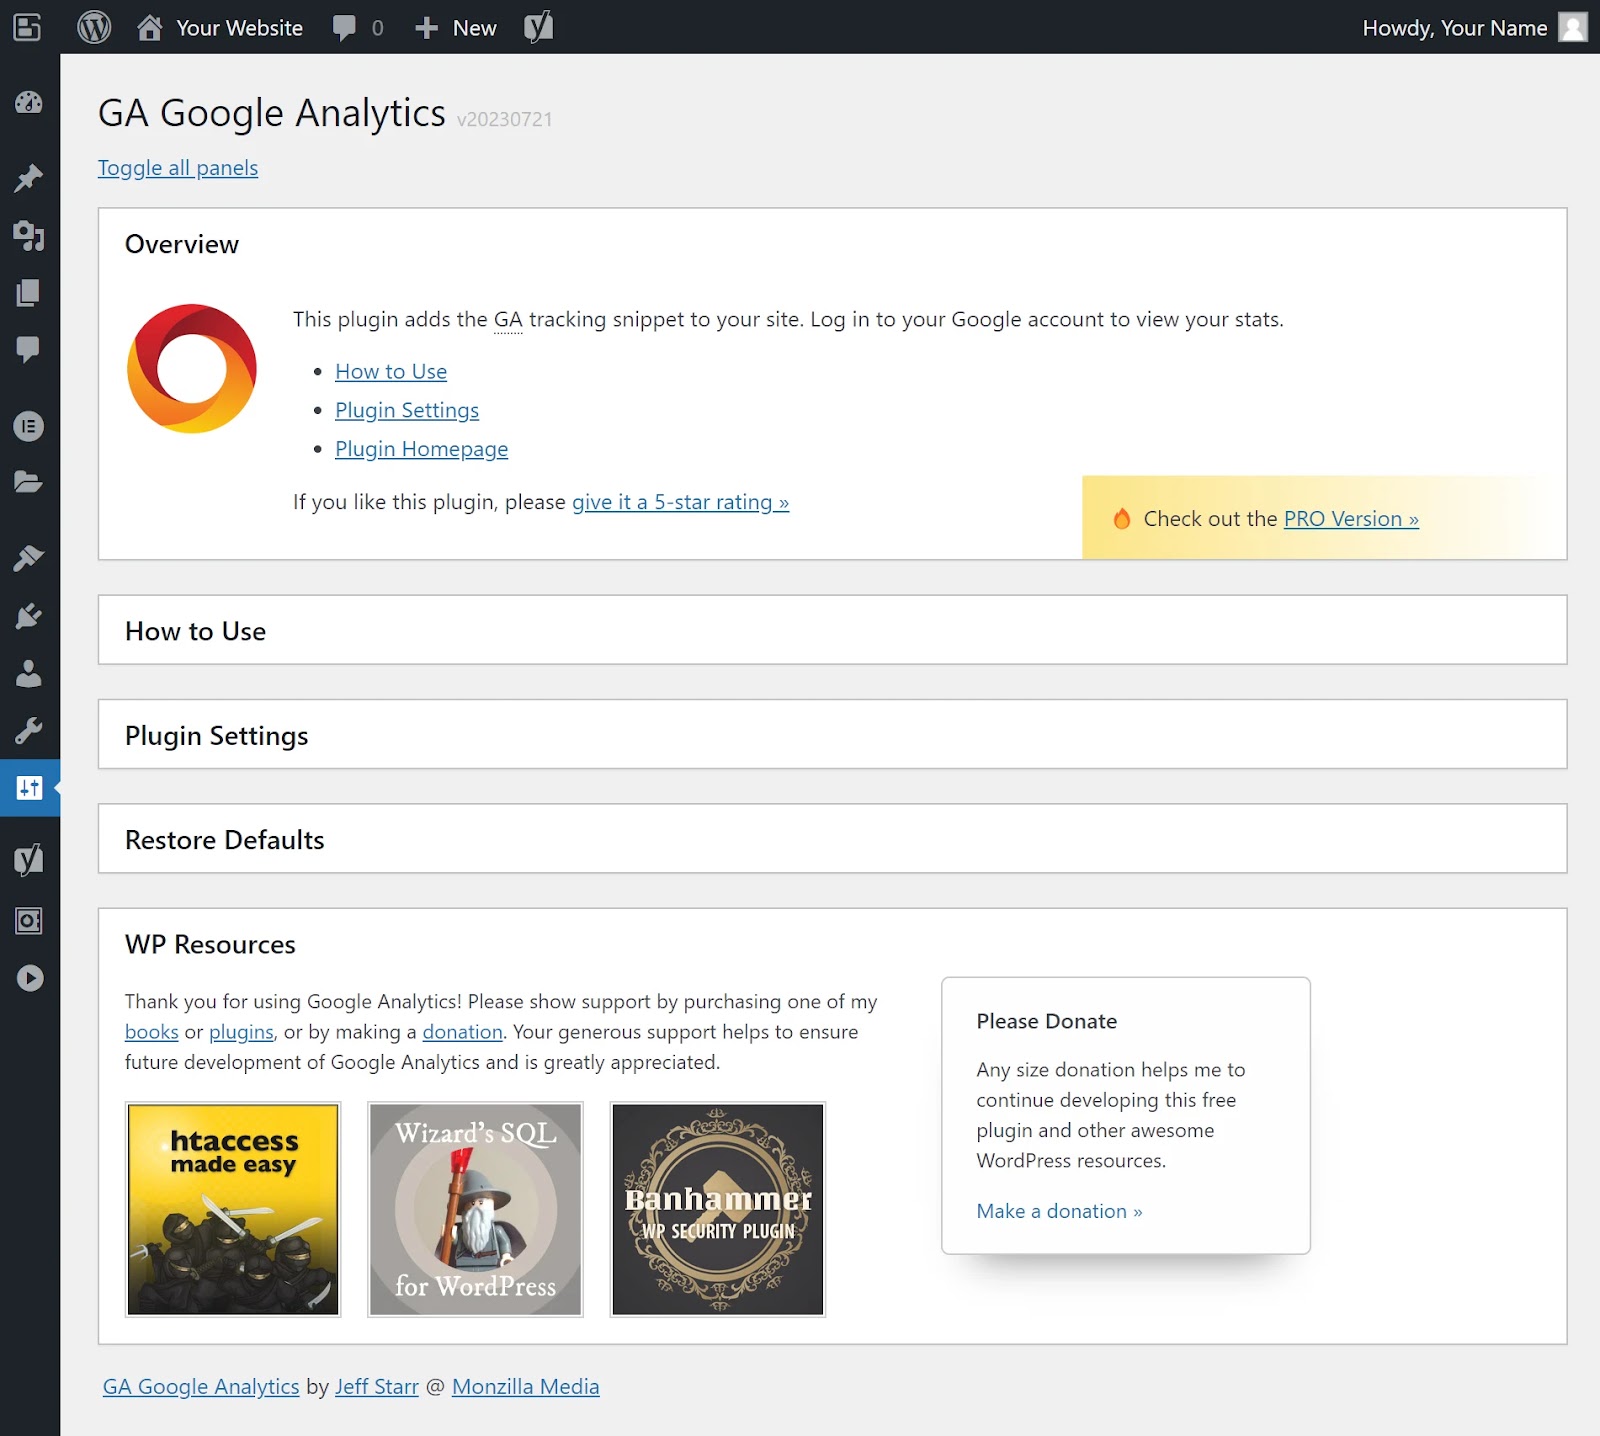 GA Google Analytics plugin overview